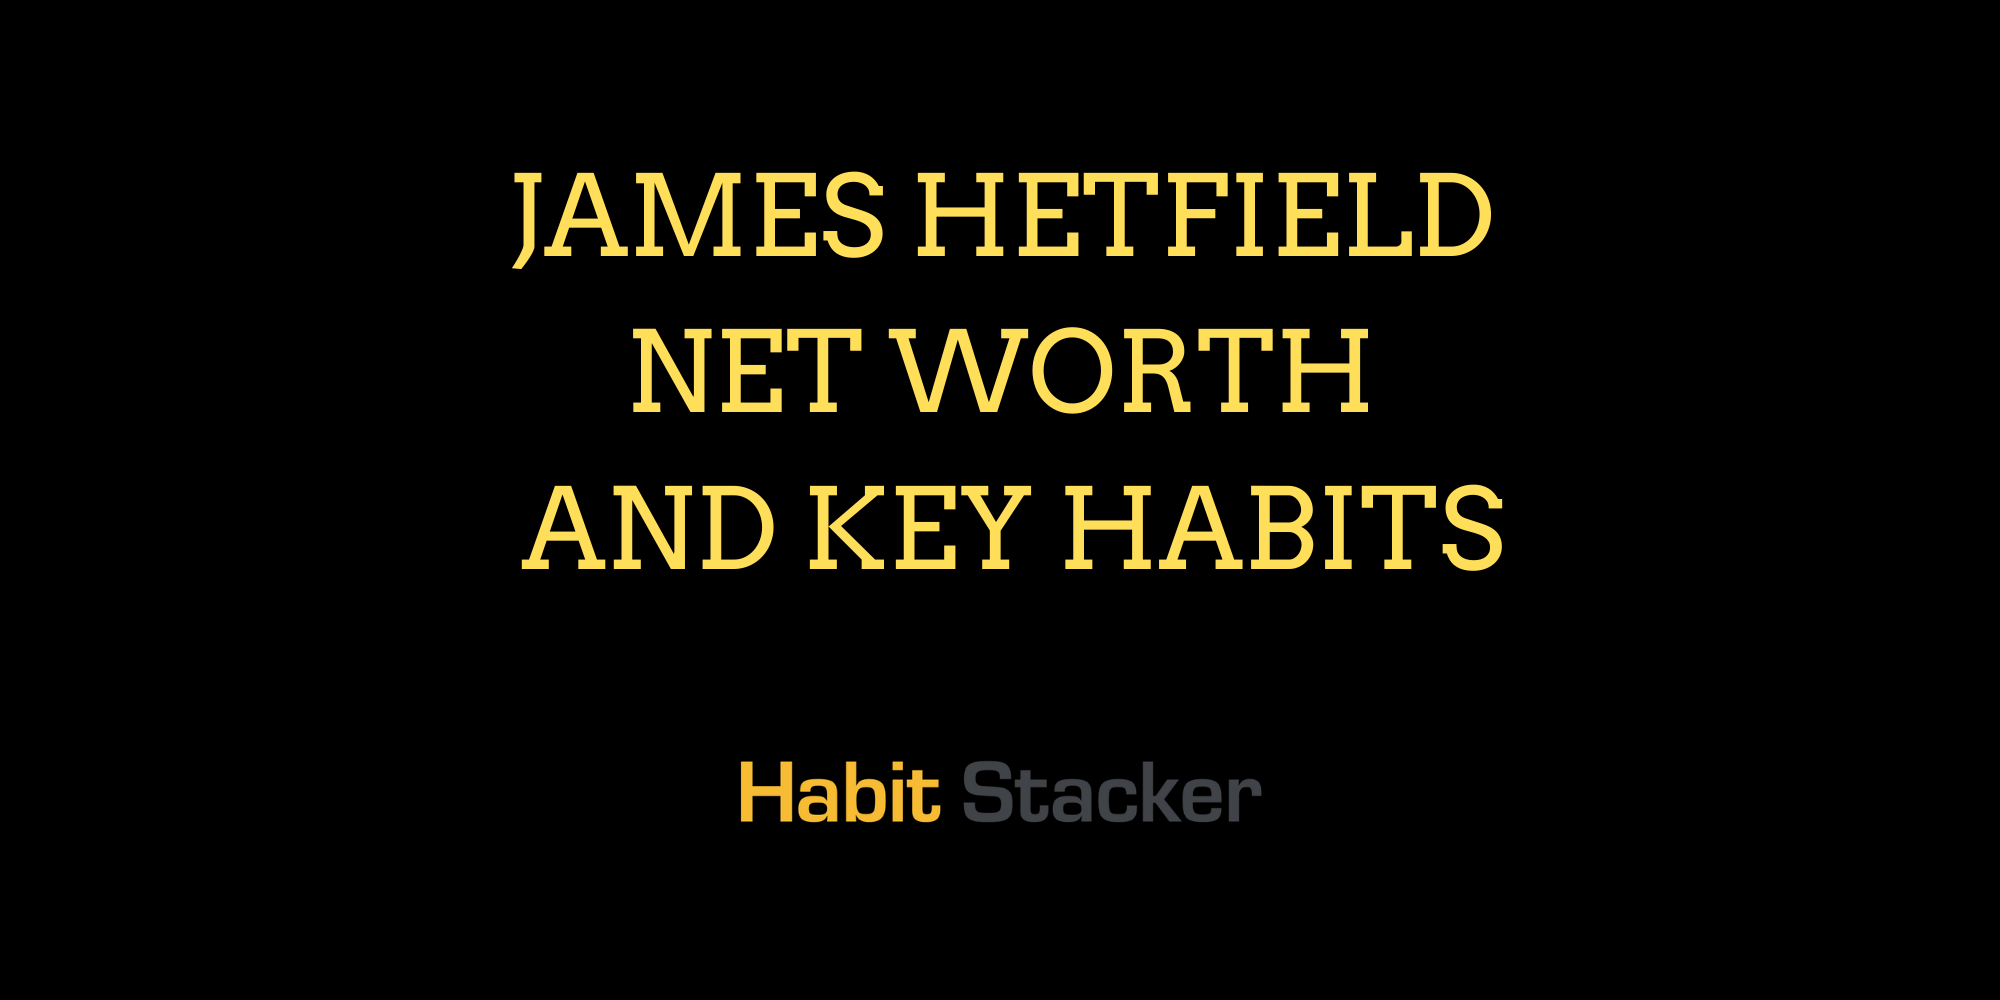 James Hetfield Net Worth and Key Habits